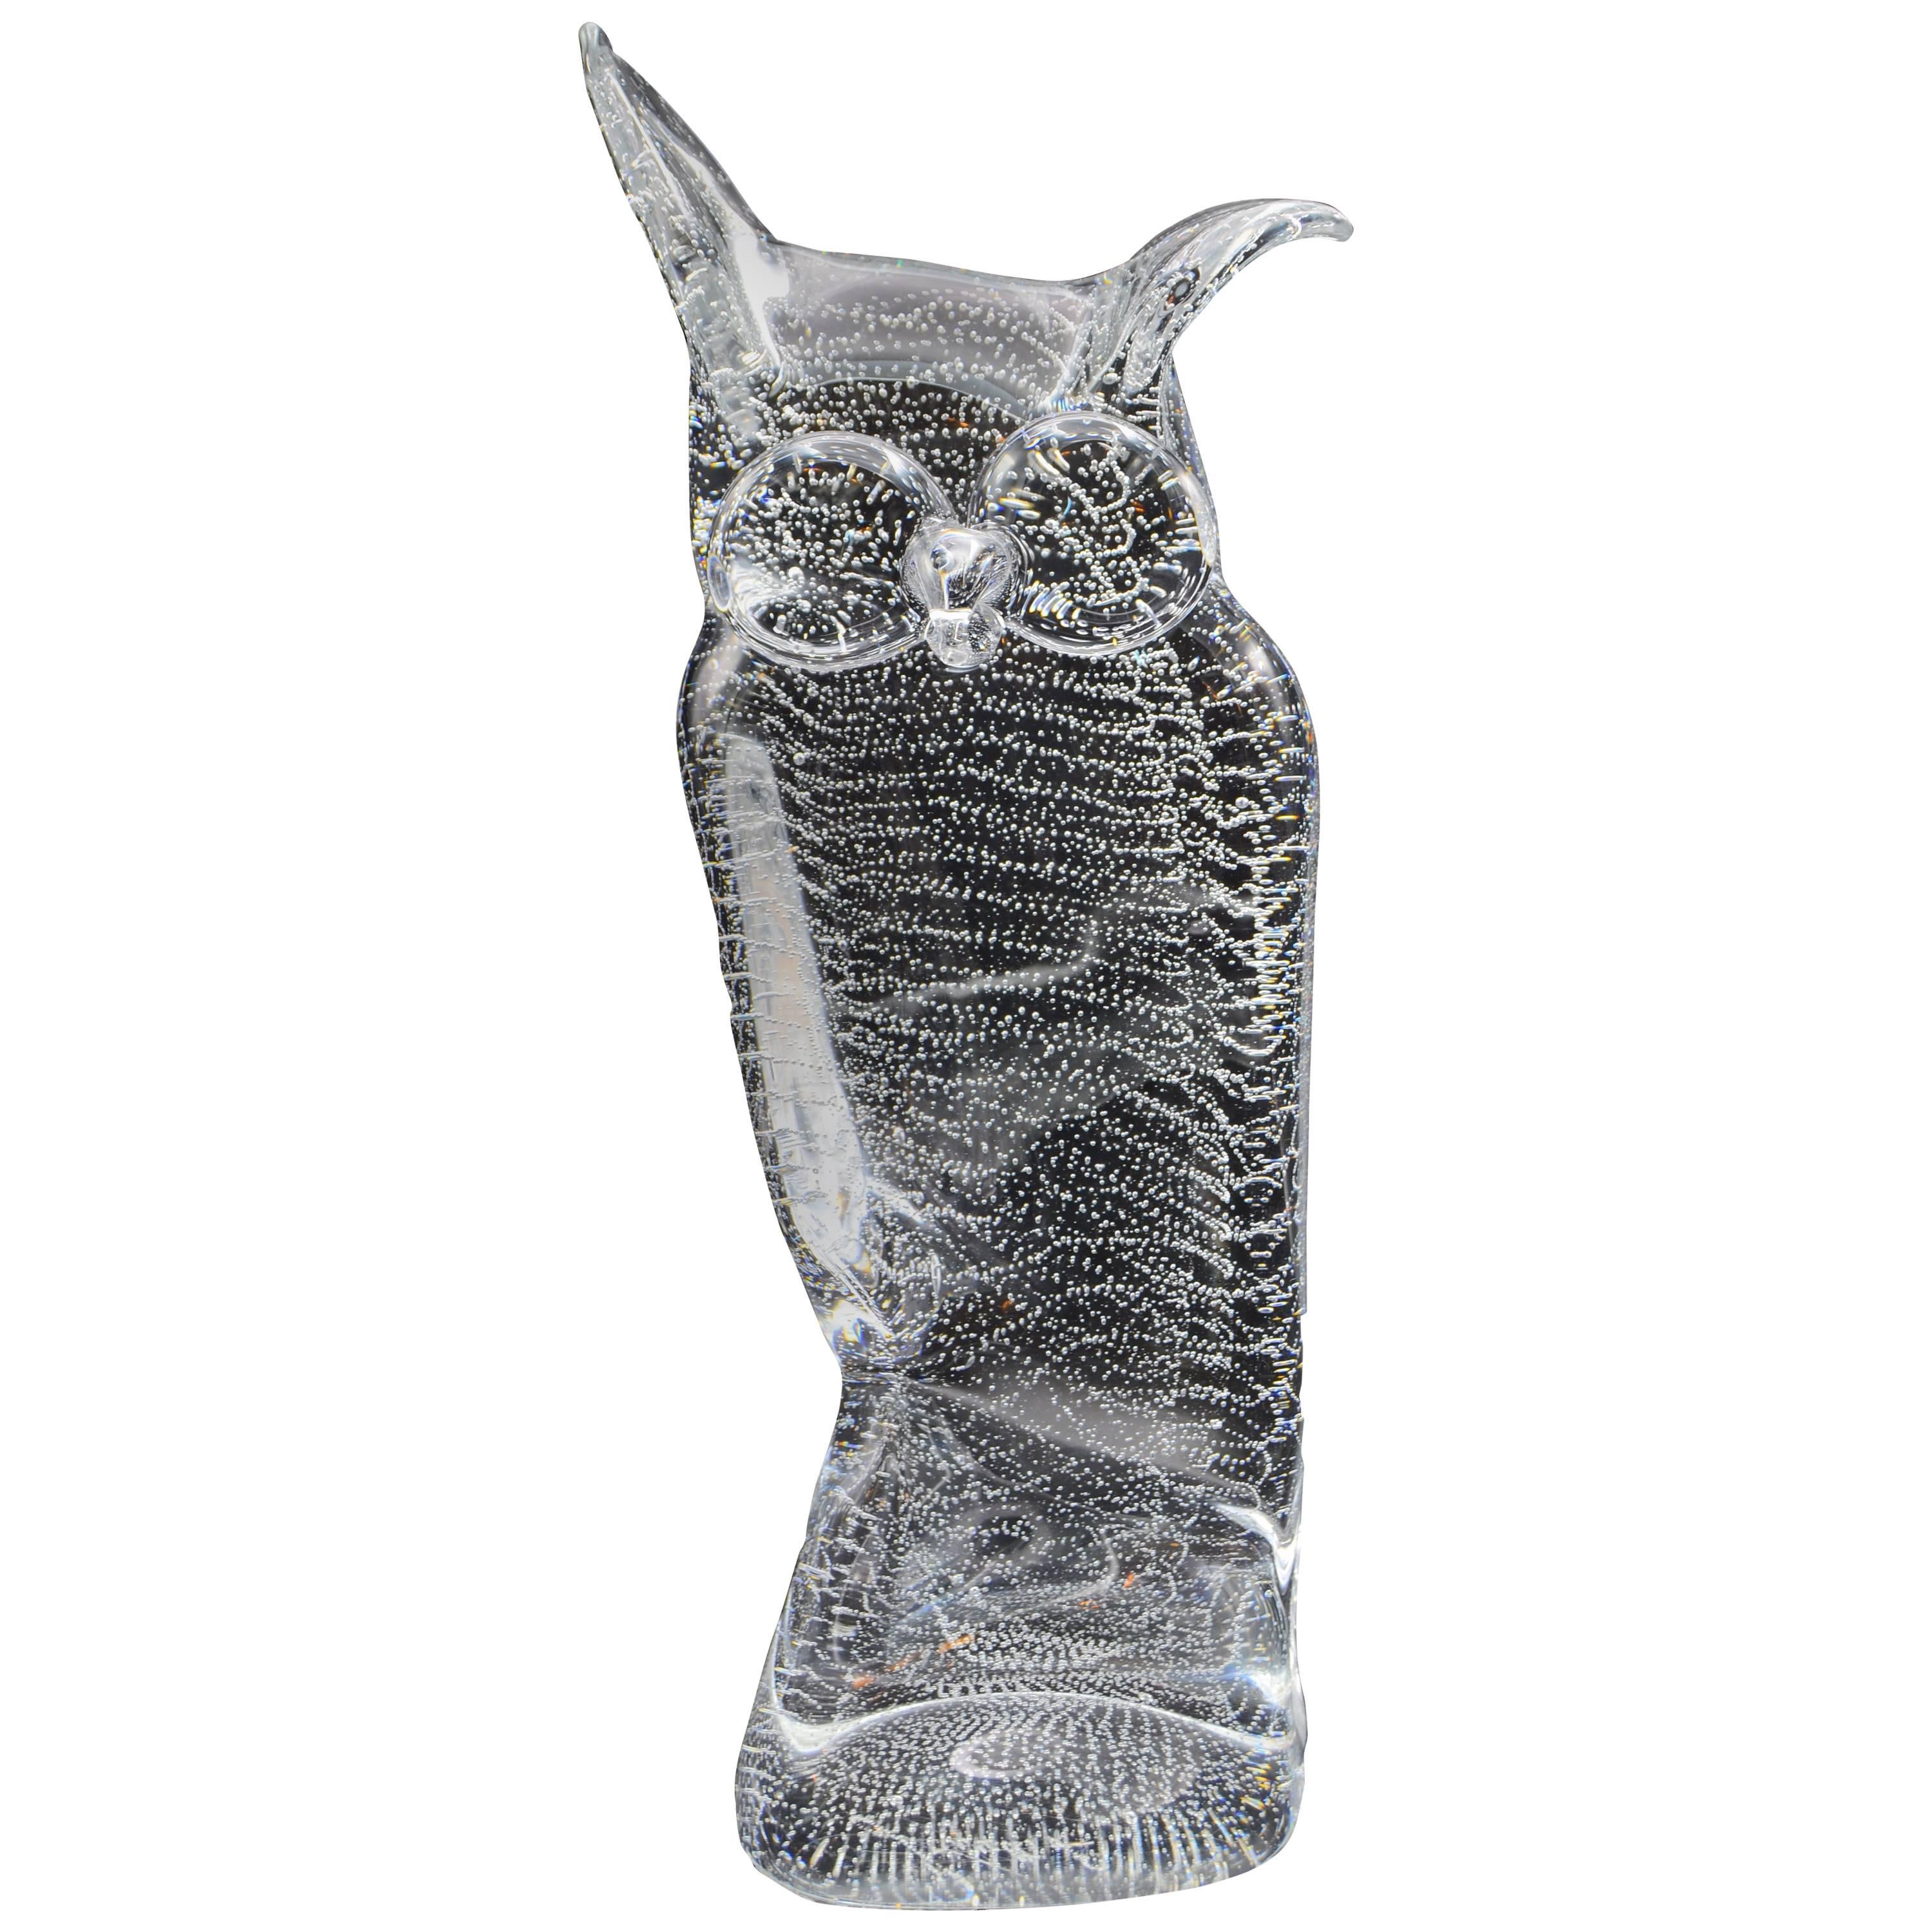 Licio Zanetti Murano Glass Owl Sculpture with Bubbles (Sculpture de hibou en verre de Murano avec bulles)